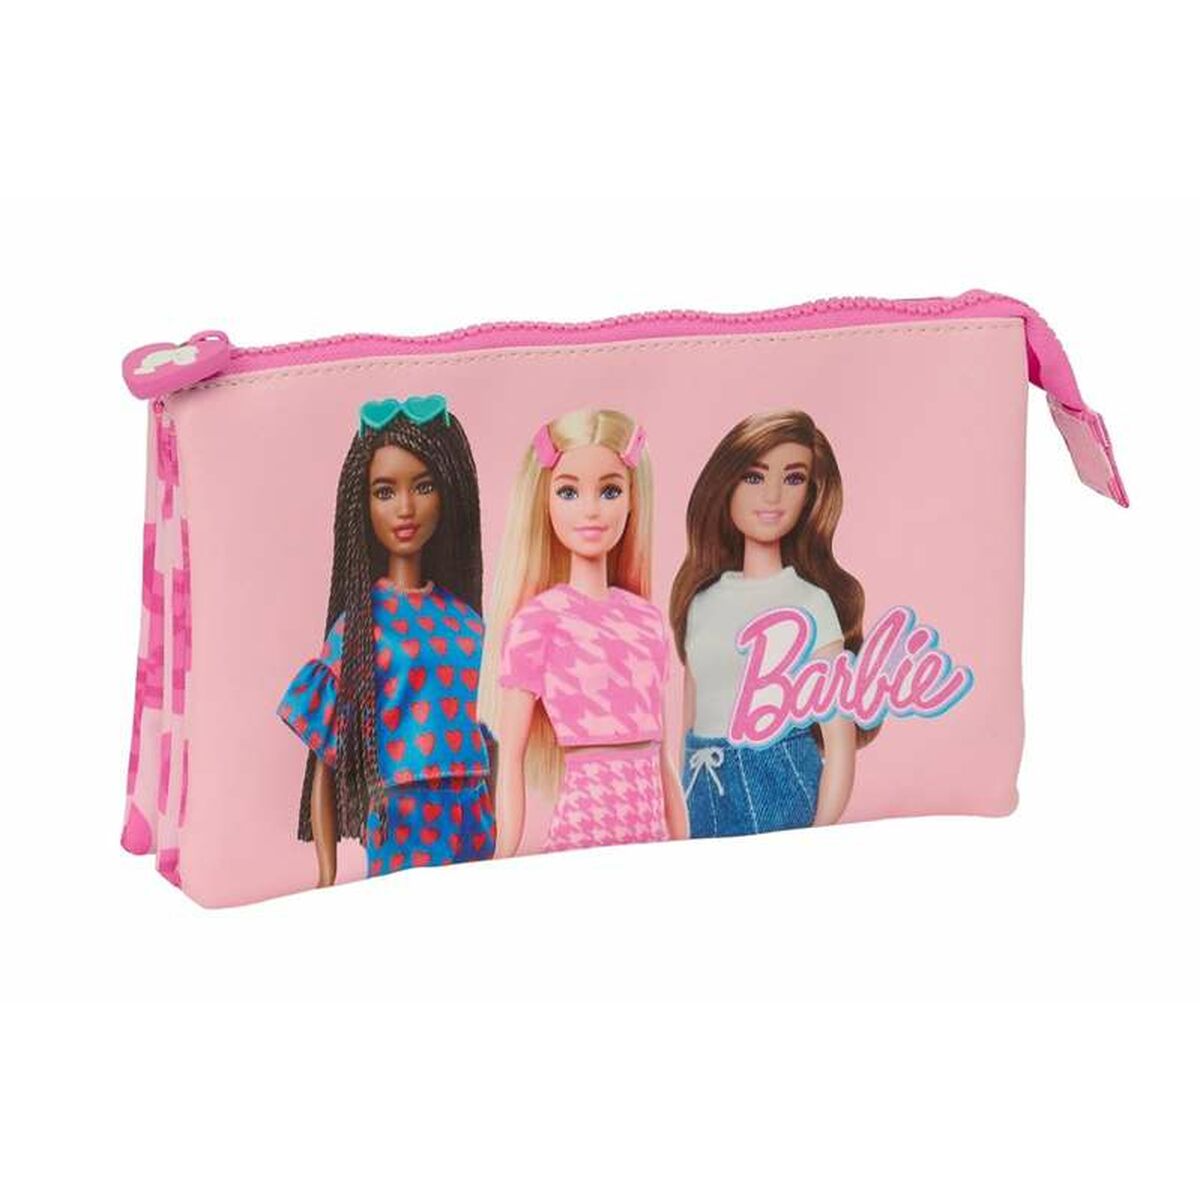 Triple Carry-all Barbie Pink 22 x 12 x 3 cm